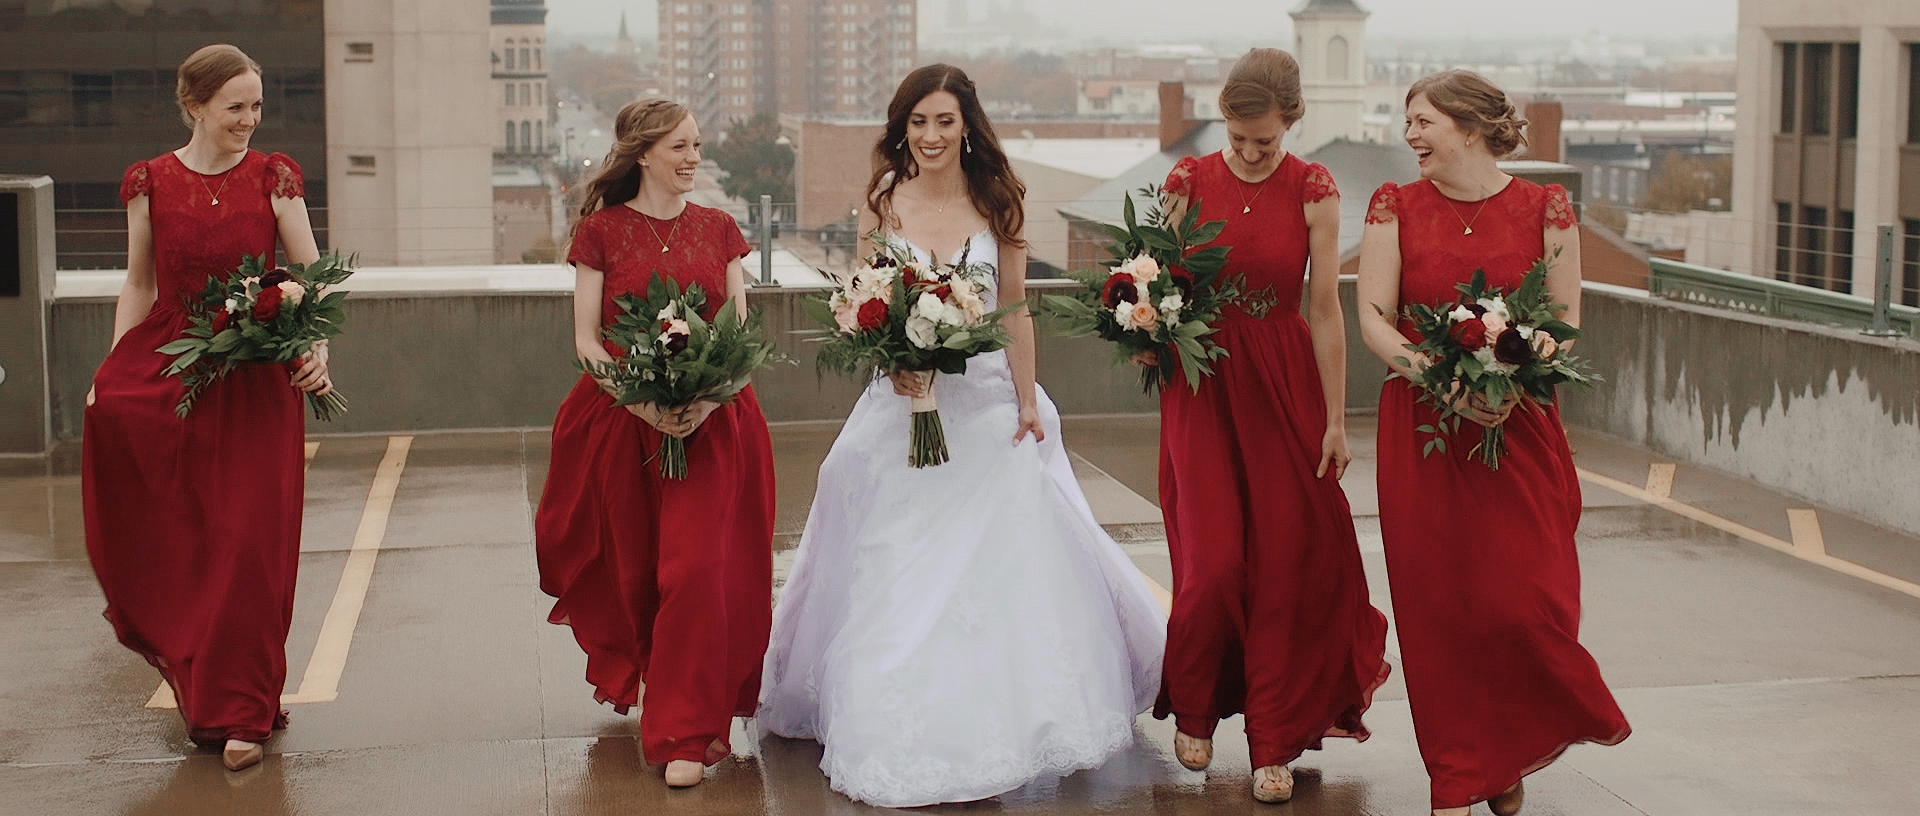 wedding-videography-wichita